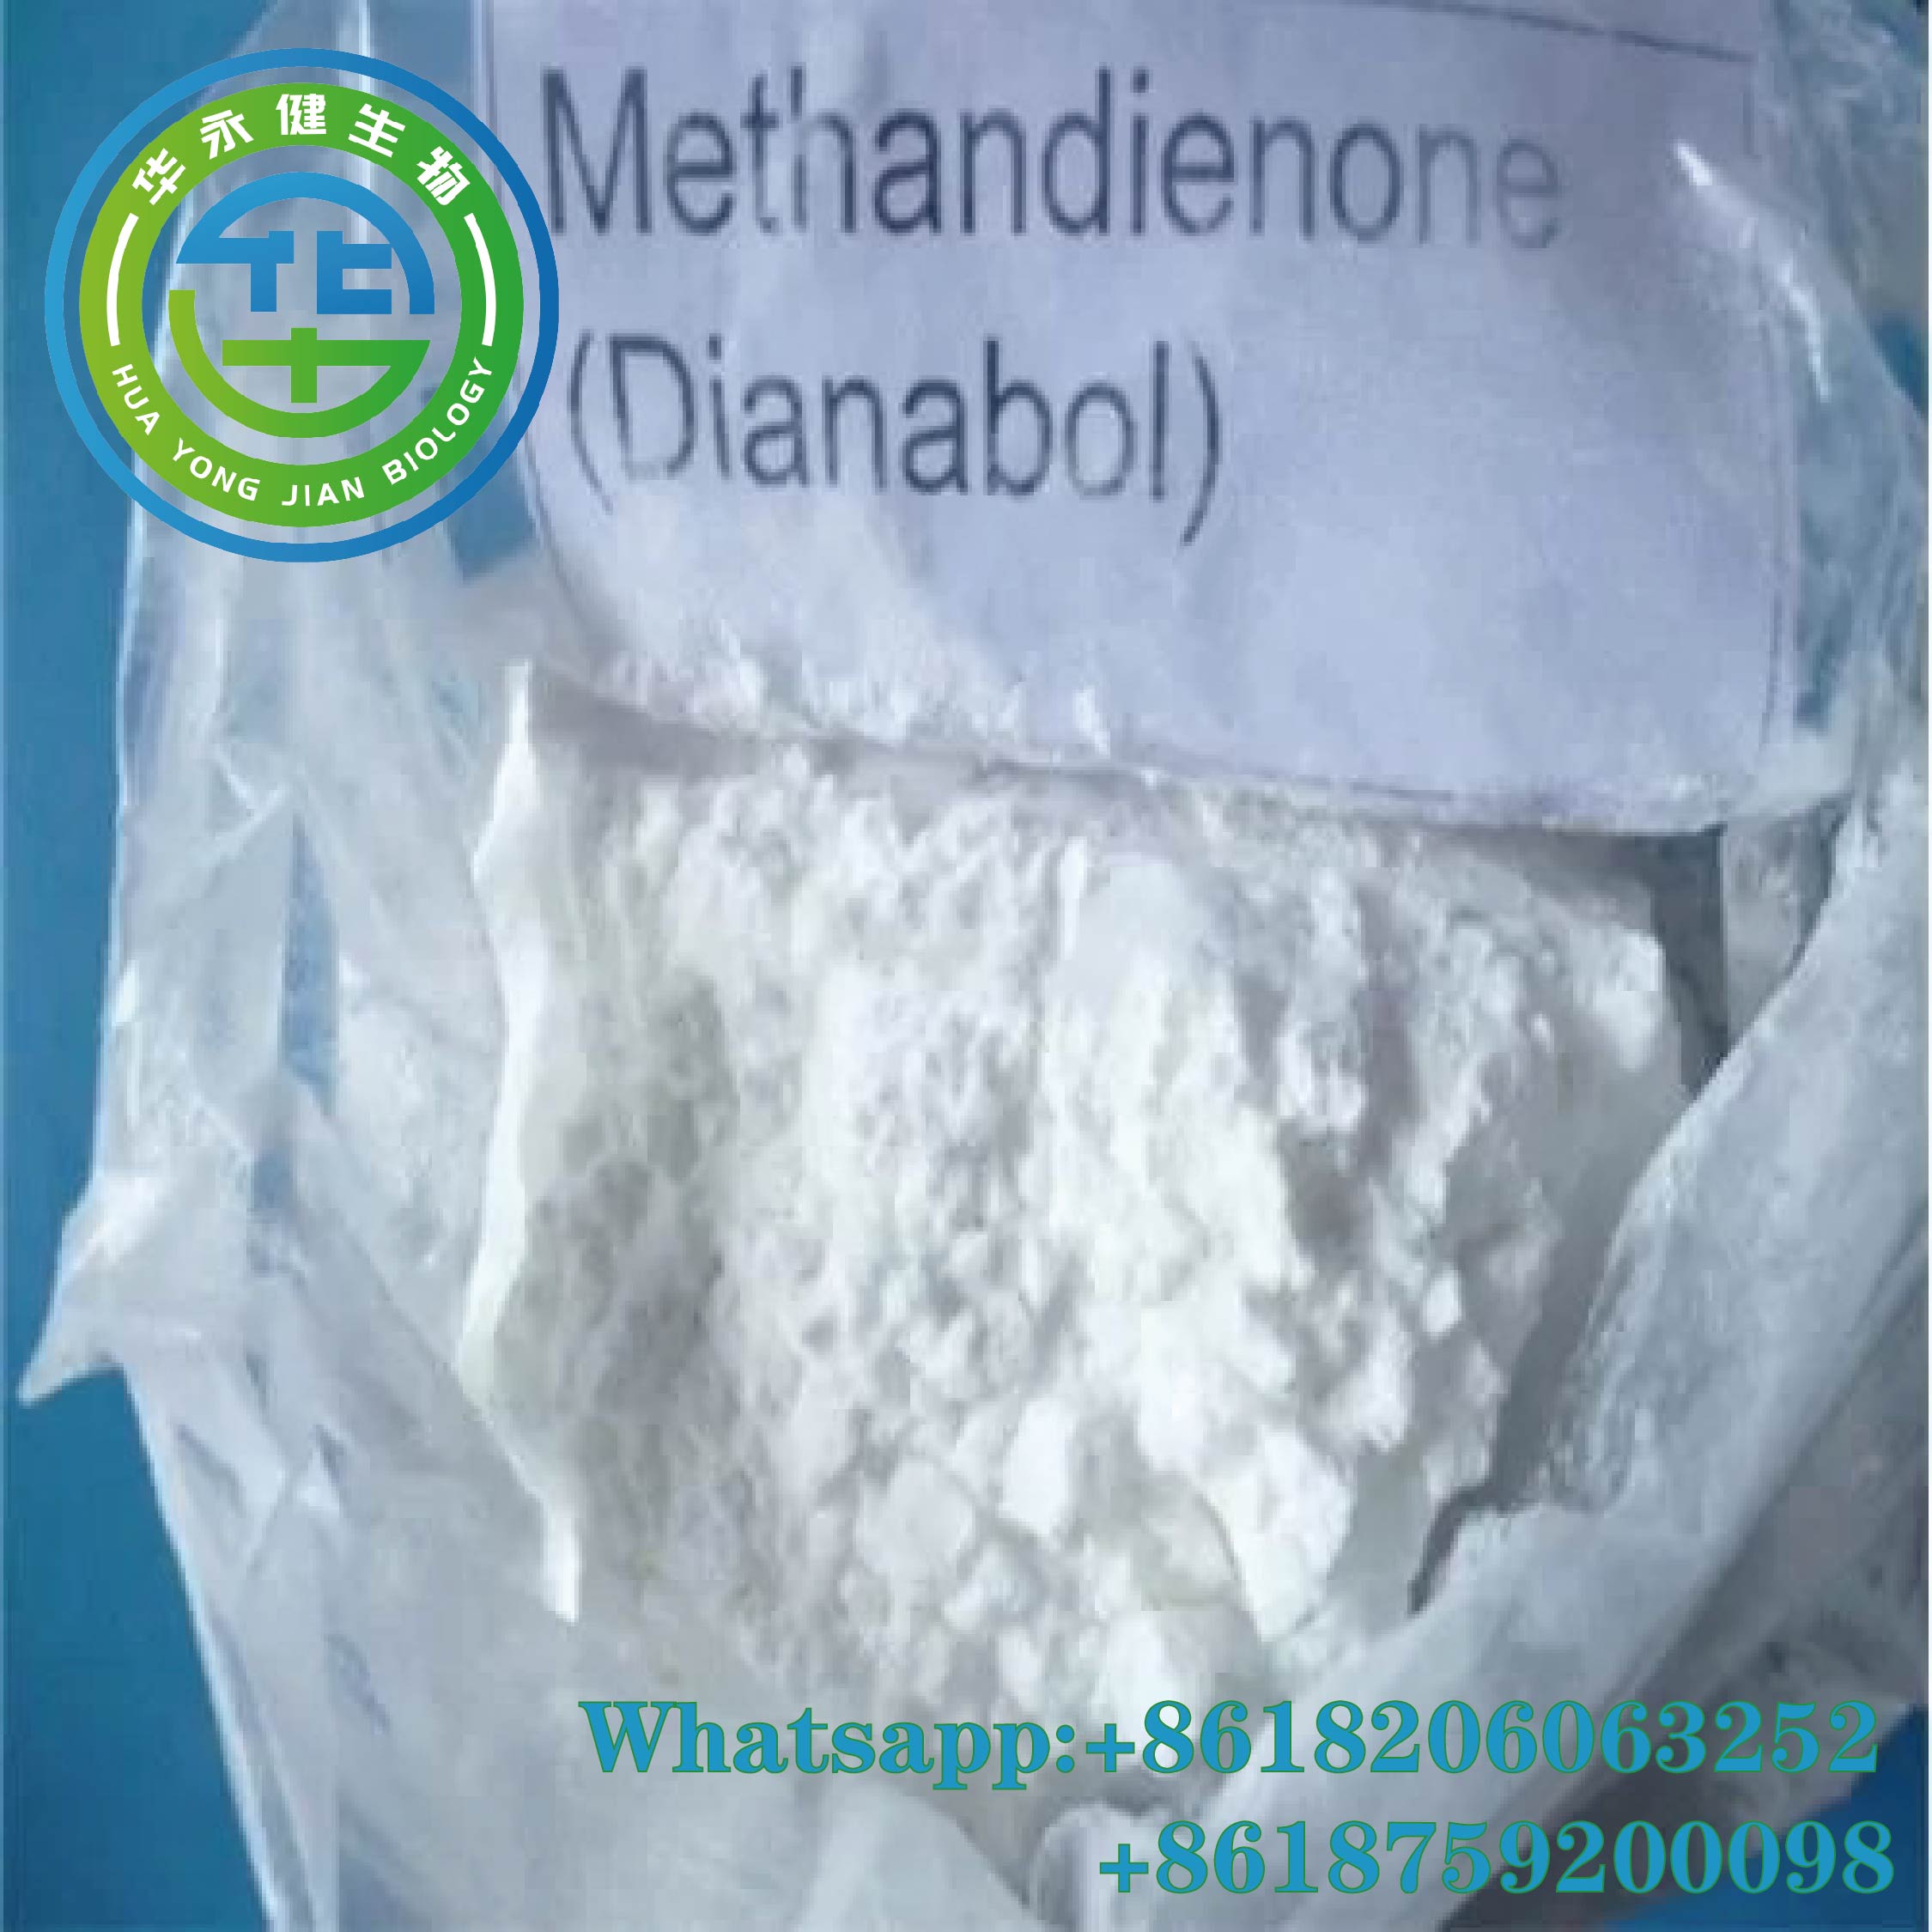 Methandrostenolone (Dianabol, methandienone) Steroids Powder USA UK Canada Malaysia Domestic Shipping